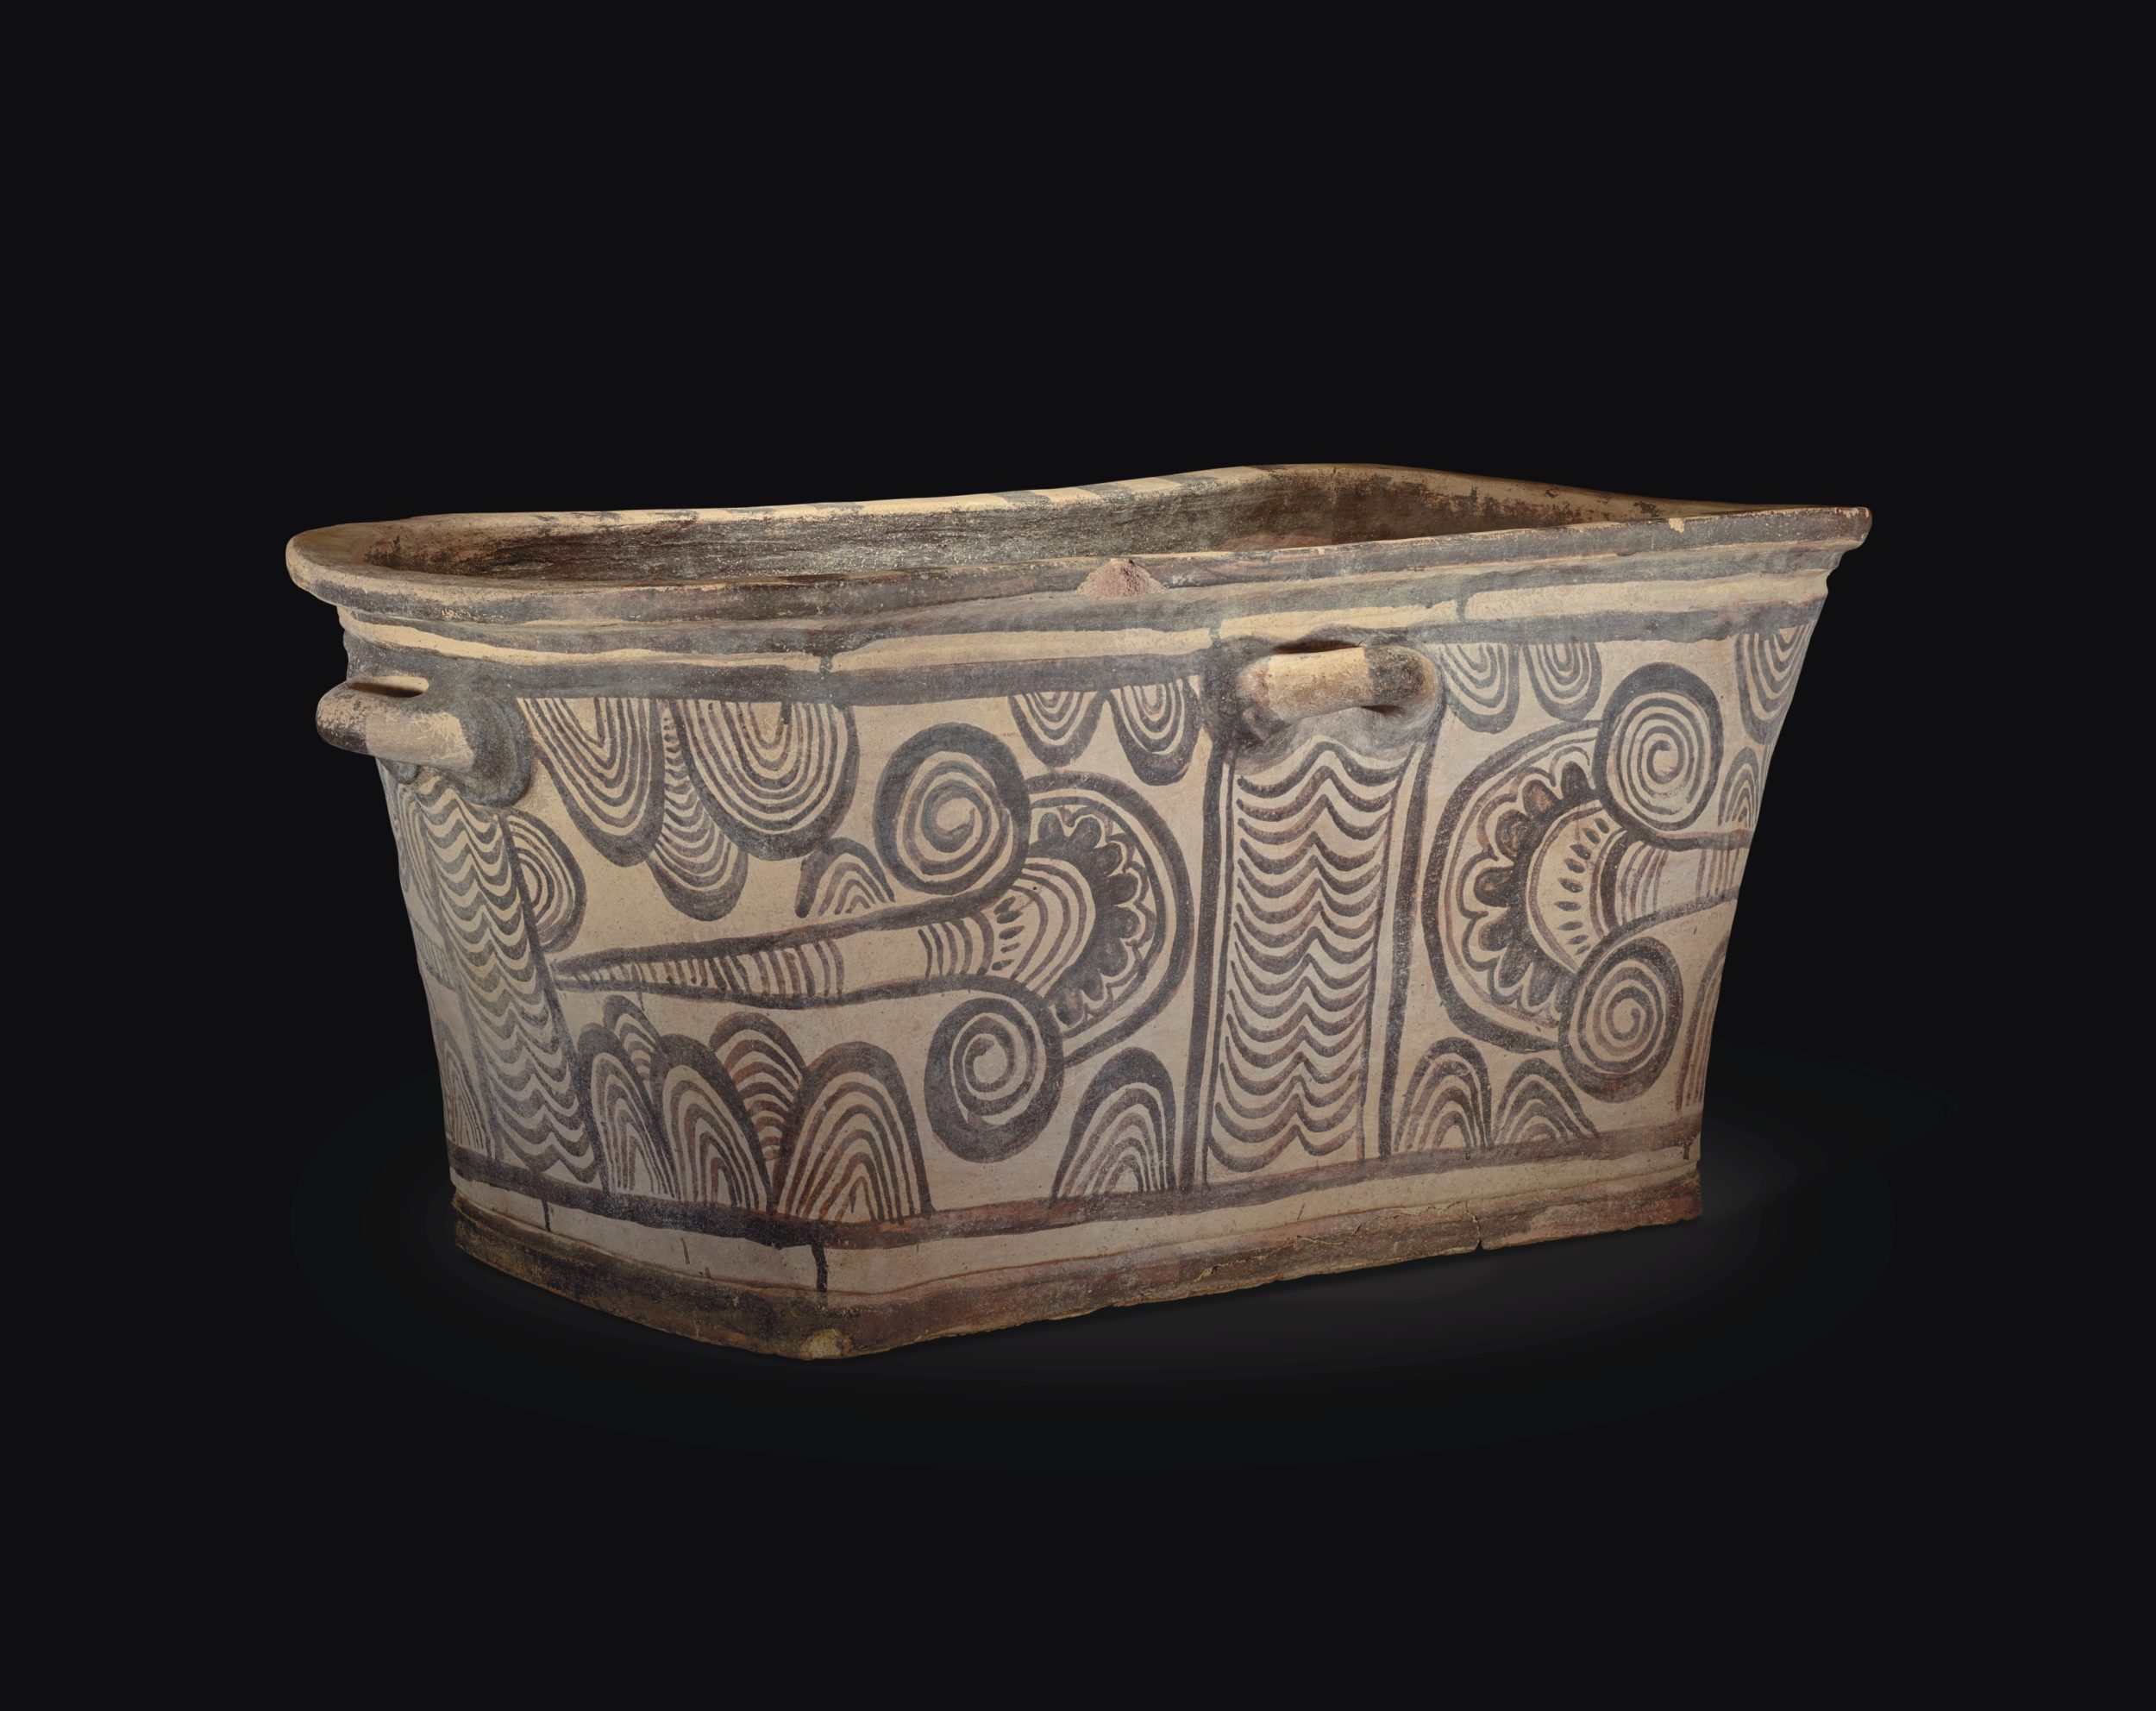 Baignoire larnax en poterie minoenne, fin Minoen IIIC, circa 1200 - 1100 avant notre ère © Christie’s